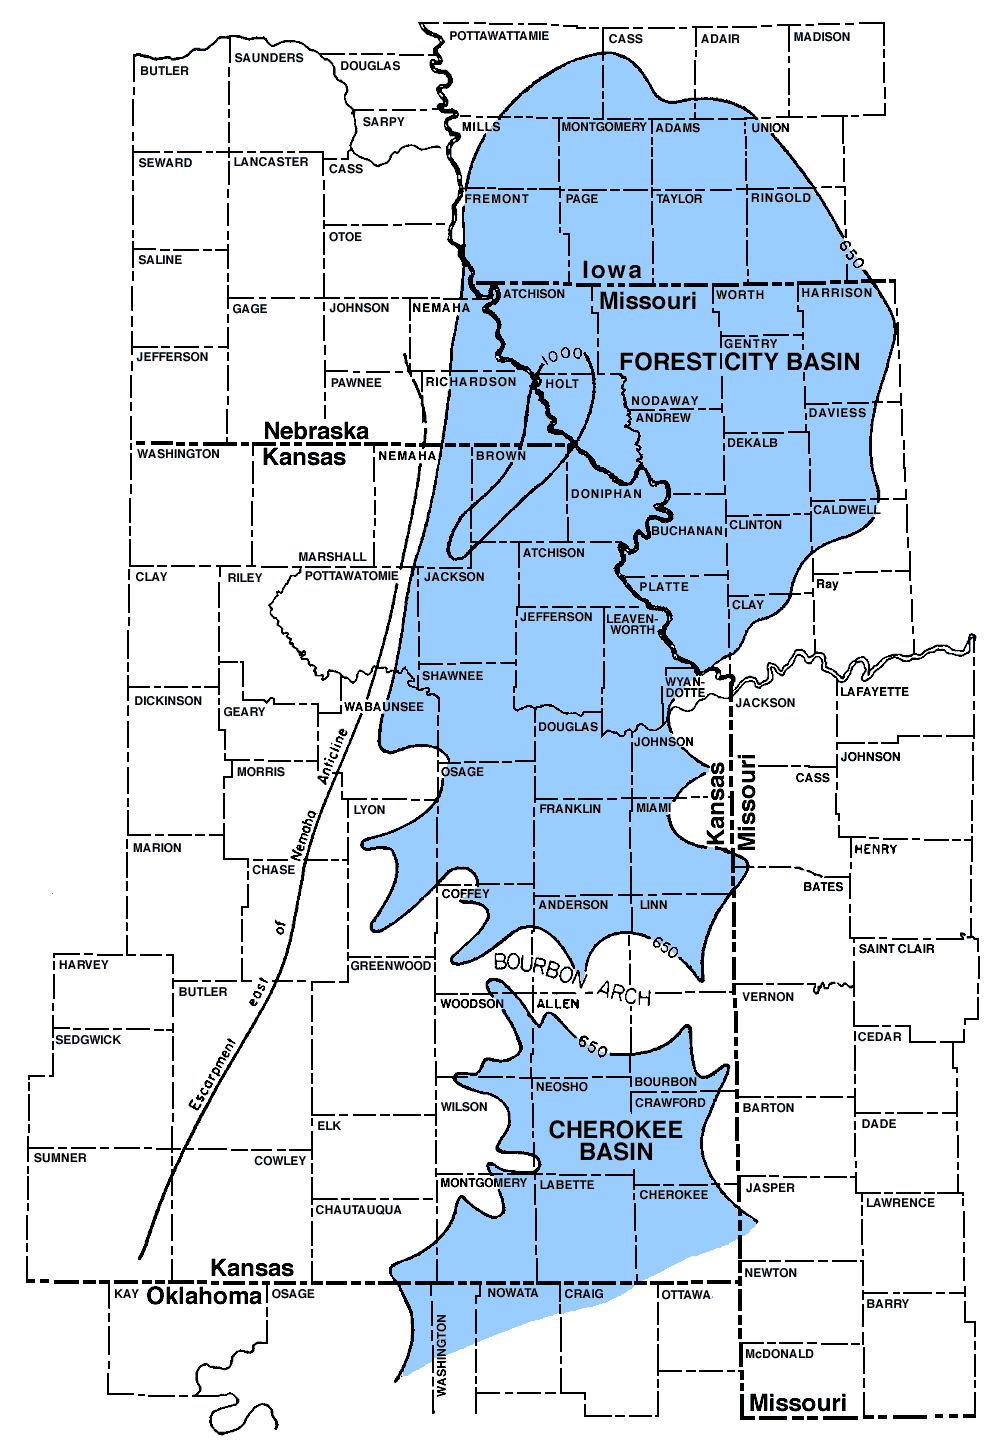 Kgs Forest City Basin Figure 1